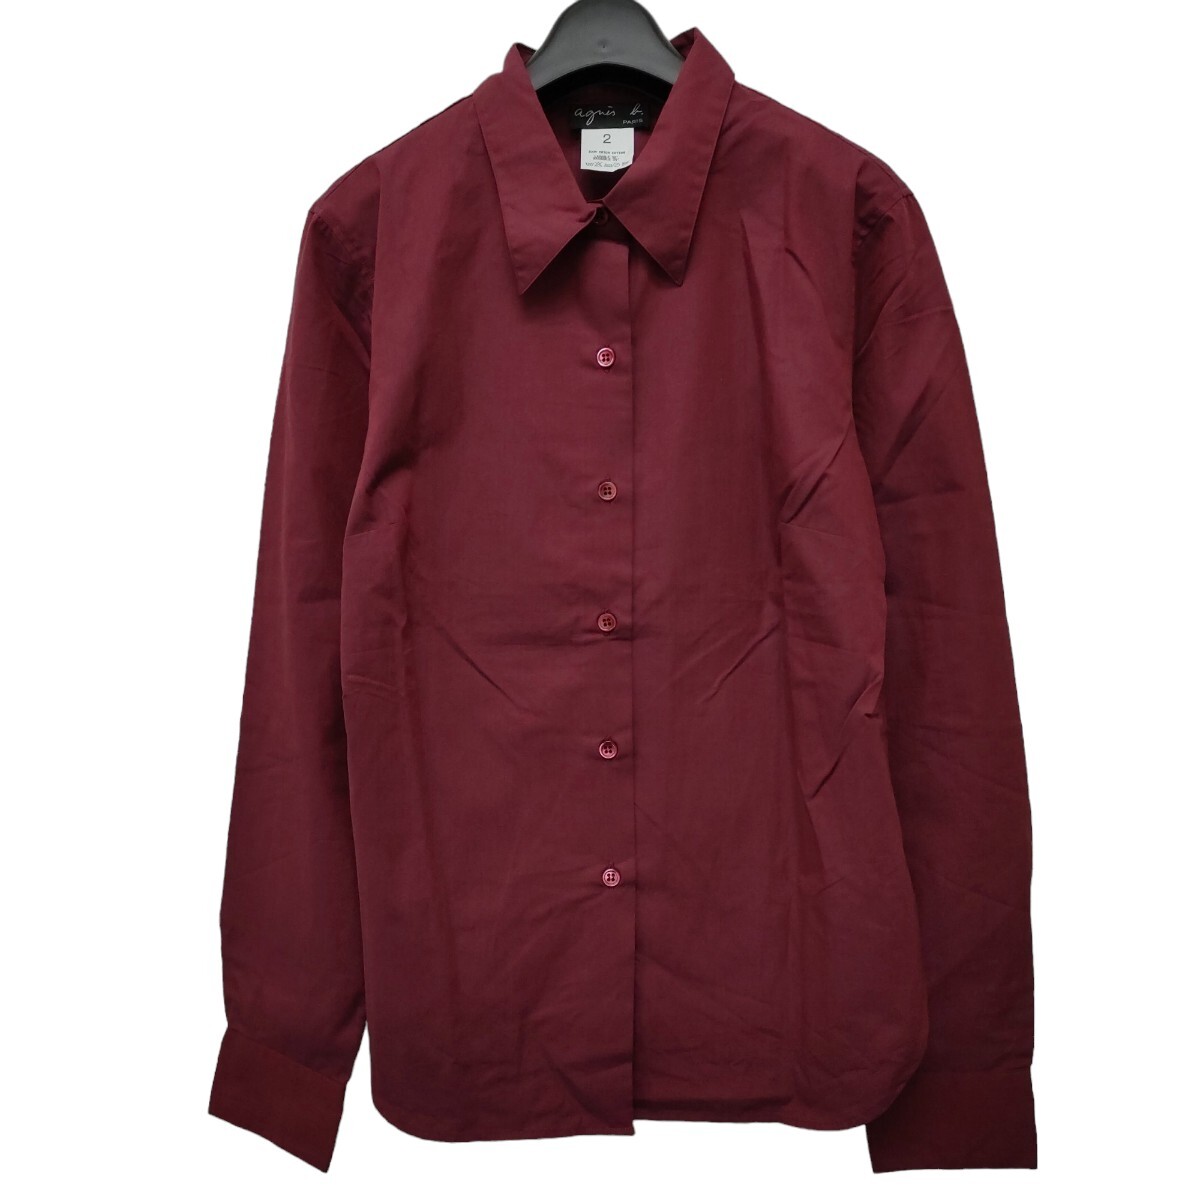 agnes b. / Agnes B lady's tops long sleeve button shirt long sleeve blouse 2 size ... color cotton 100% beautiful goods I-3585